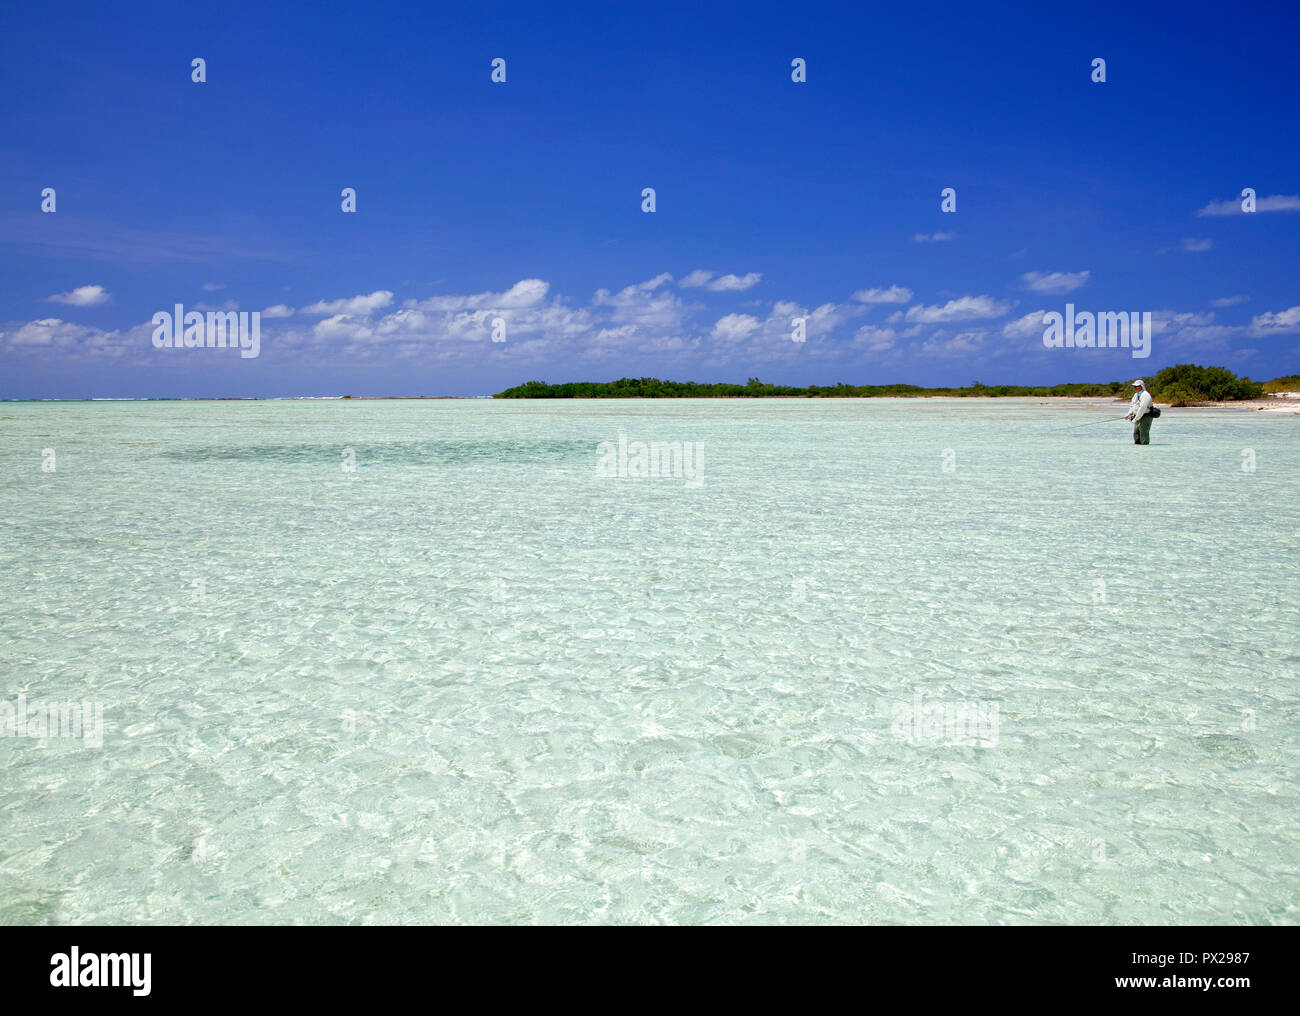 Fly fishing for bonefish in the Bahamas Stock Photo